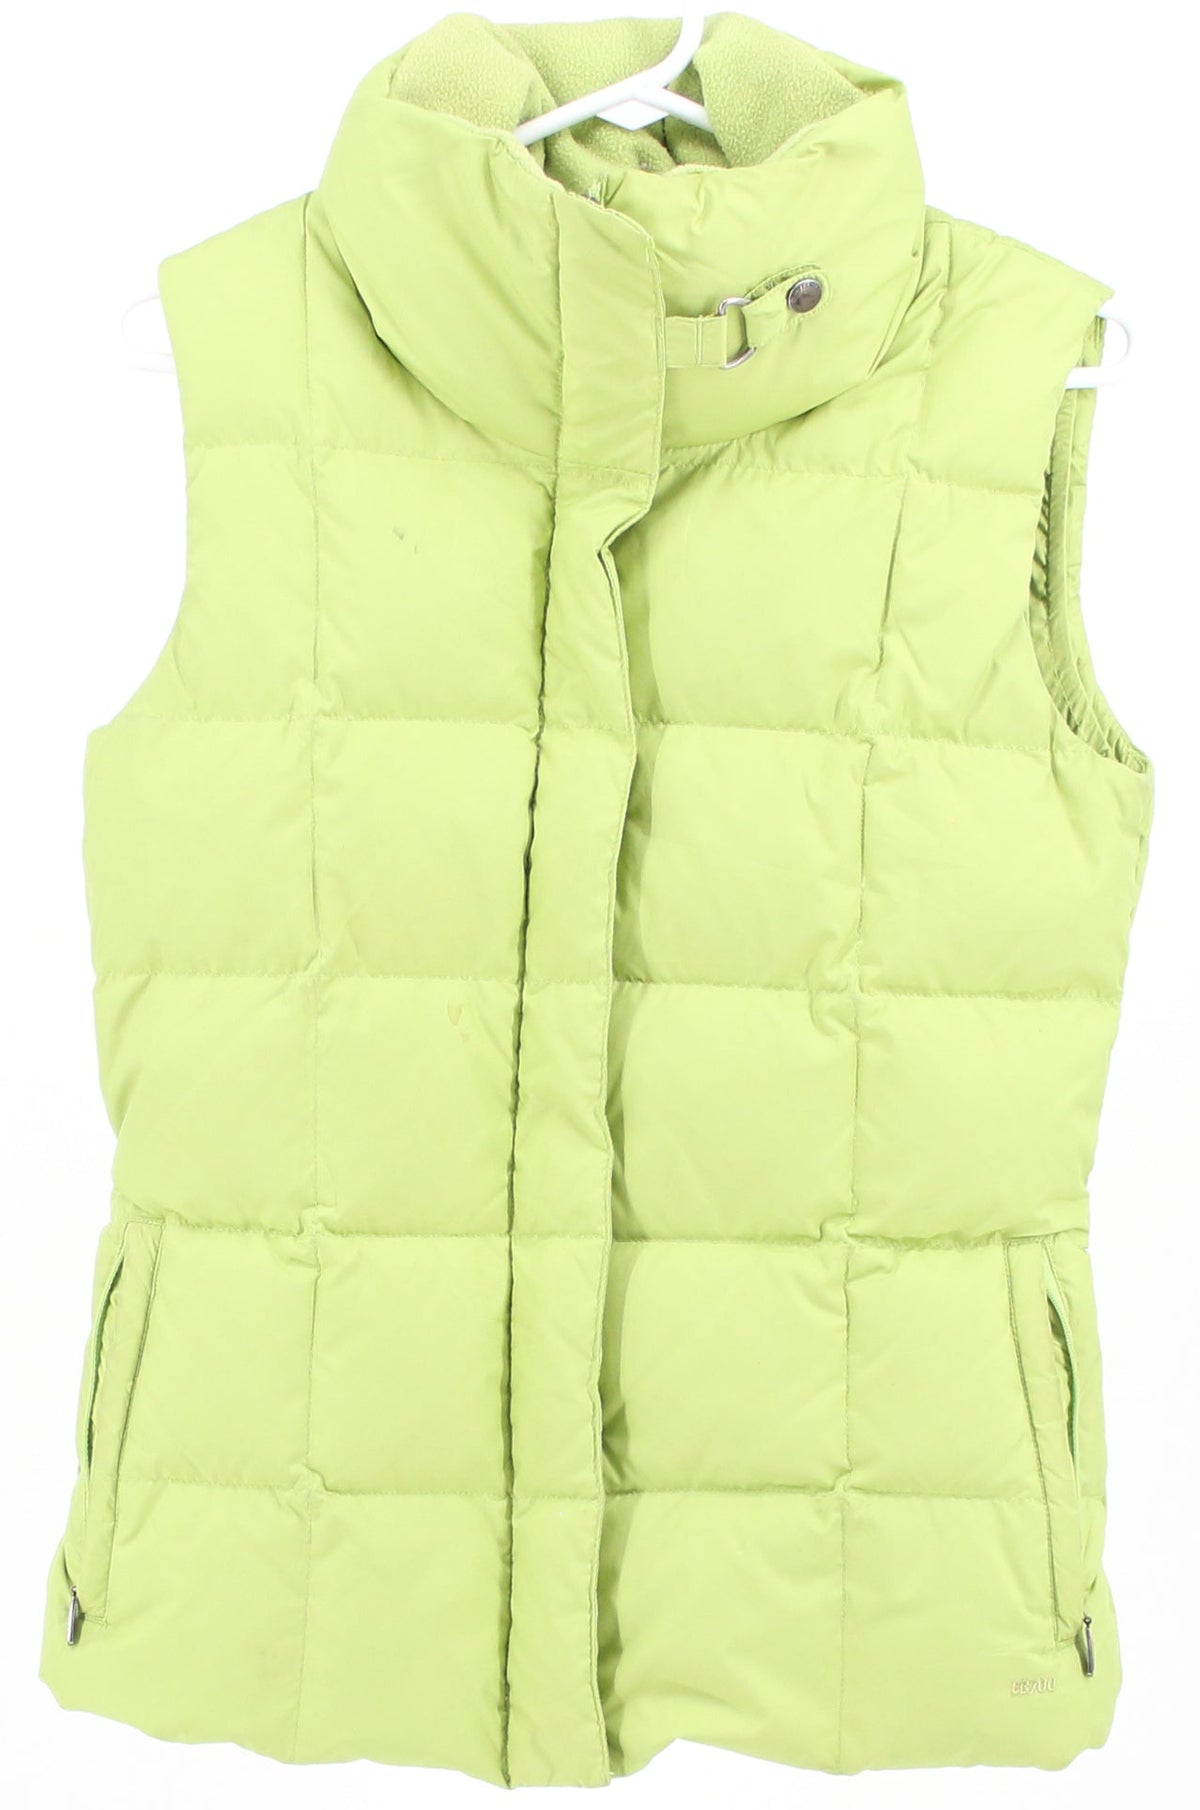 Eddie Bauer Premium Quality Goose Down Insulated Green Vest